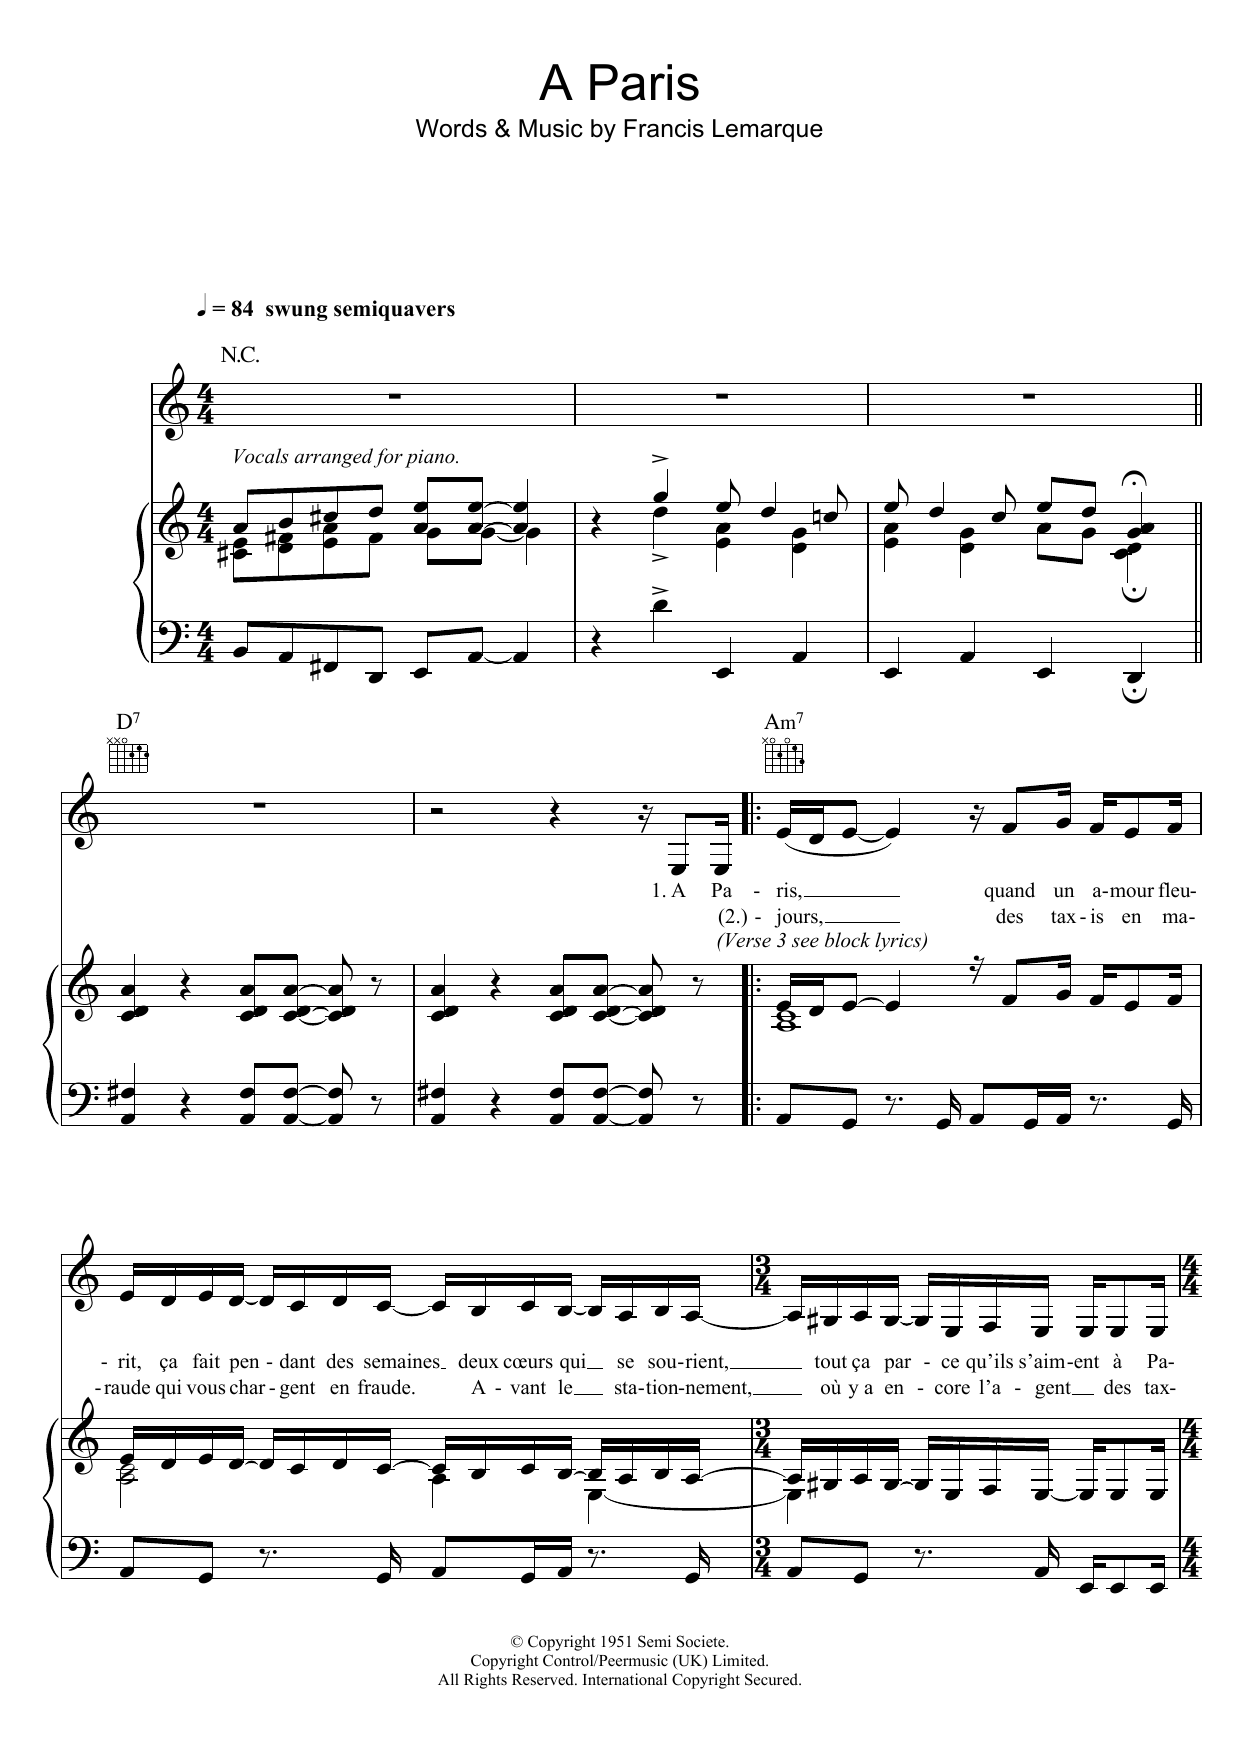 Zaz A Paris sheet music notes and chords arranged for Piano, Vocal & Guitar Chords